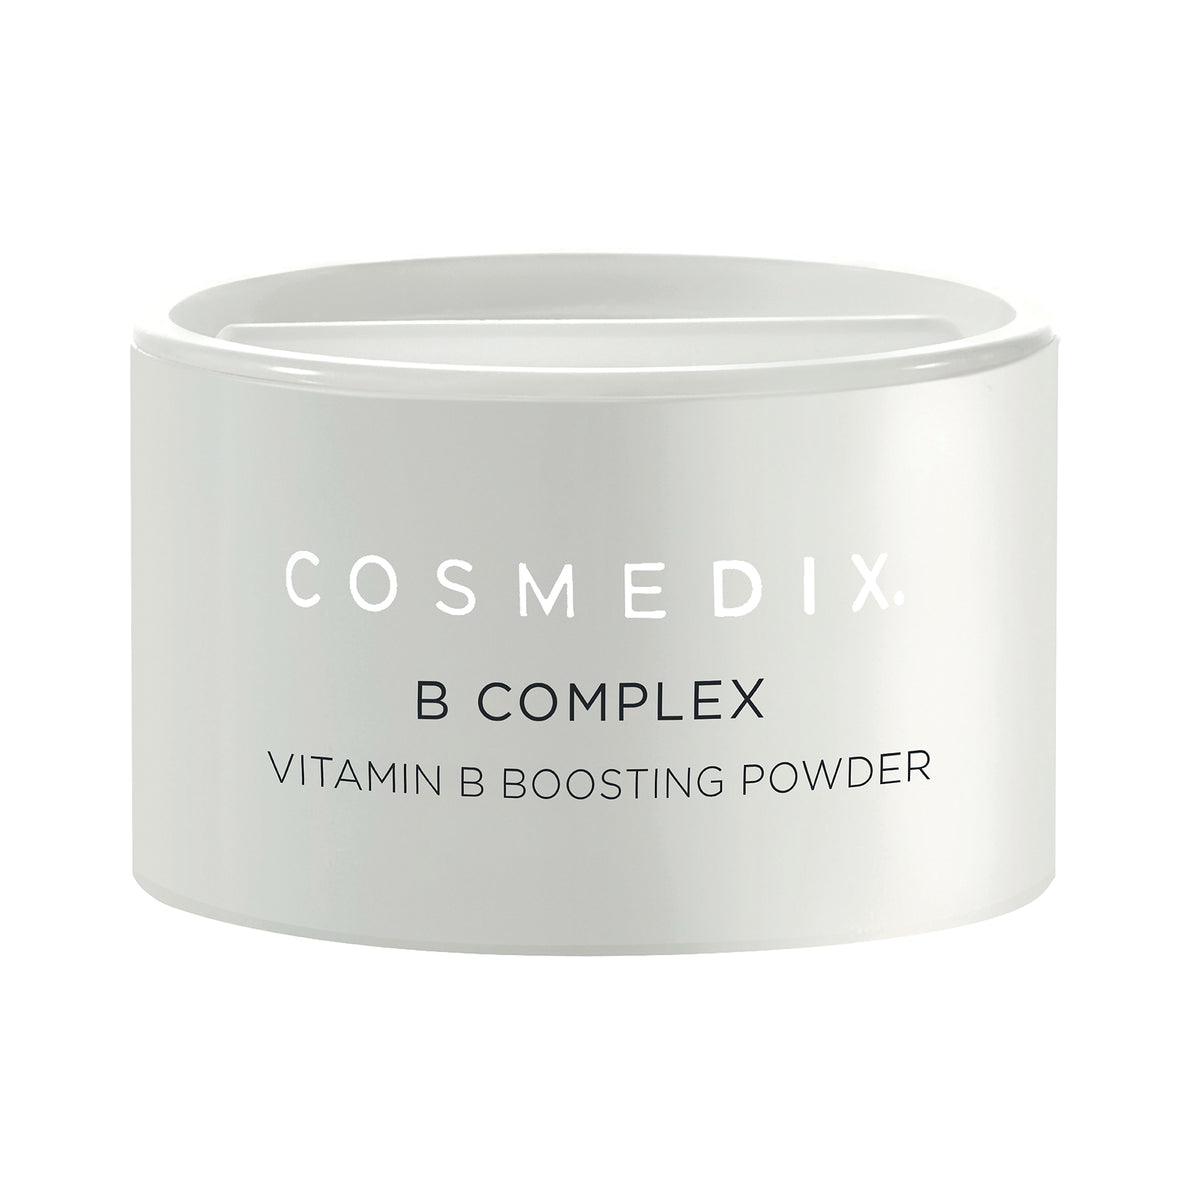 Cosmedix - B Complex Vitamin B Boosting Powder (6g)